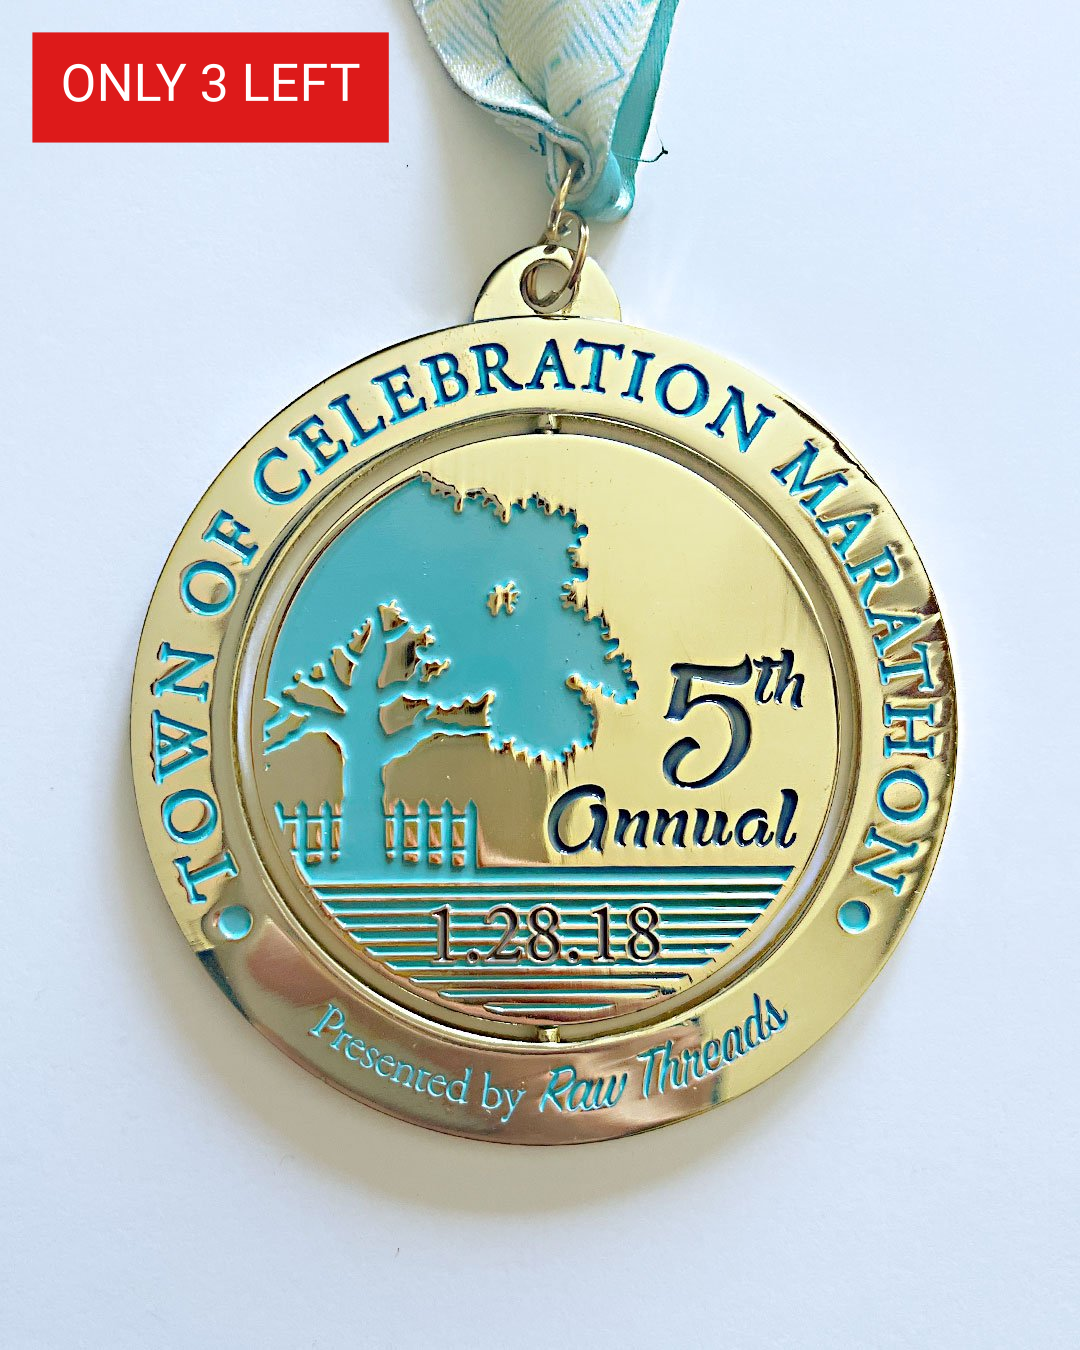 2018 Celebration Marathon Medal